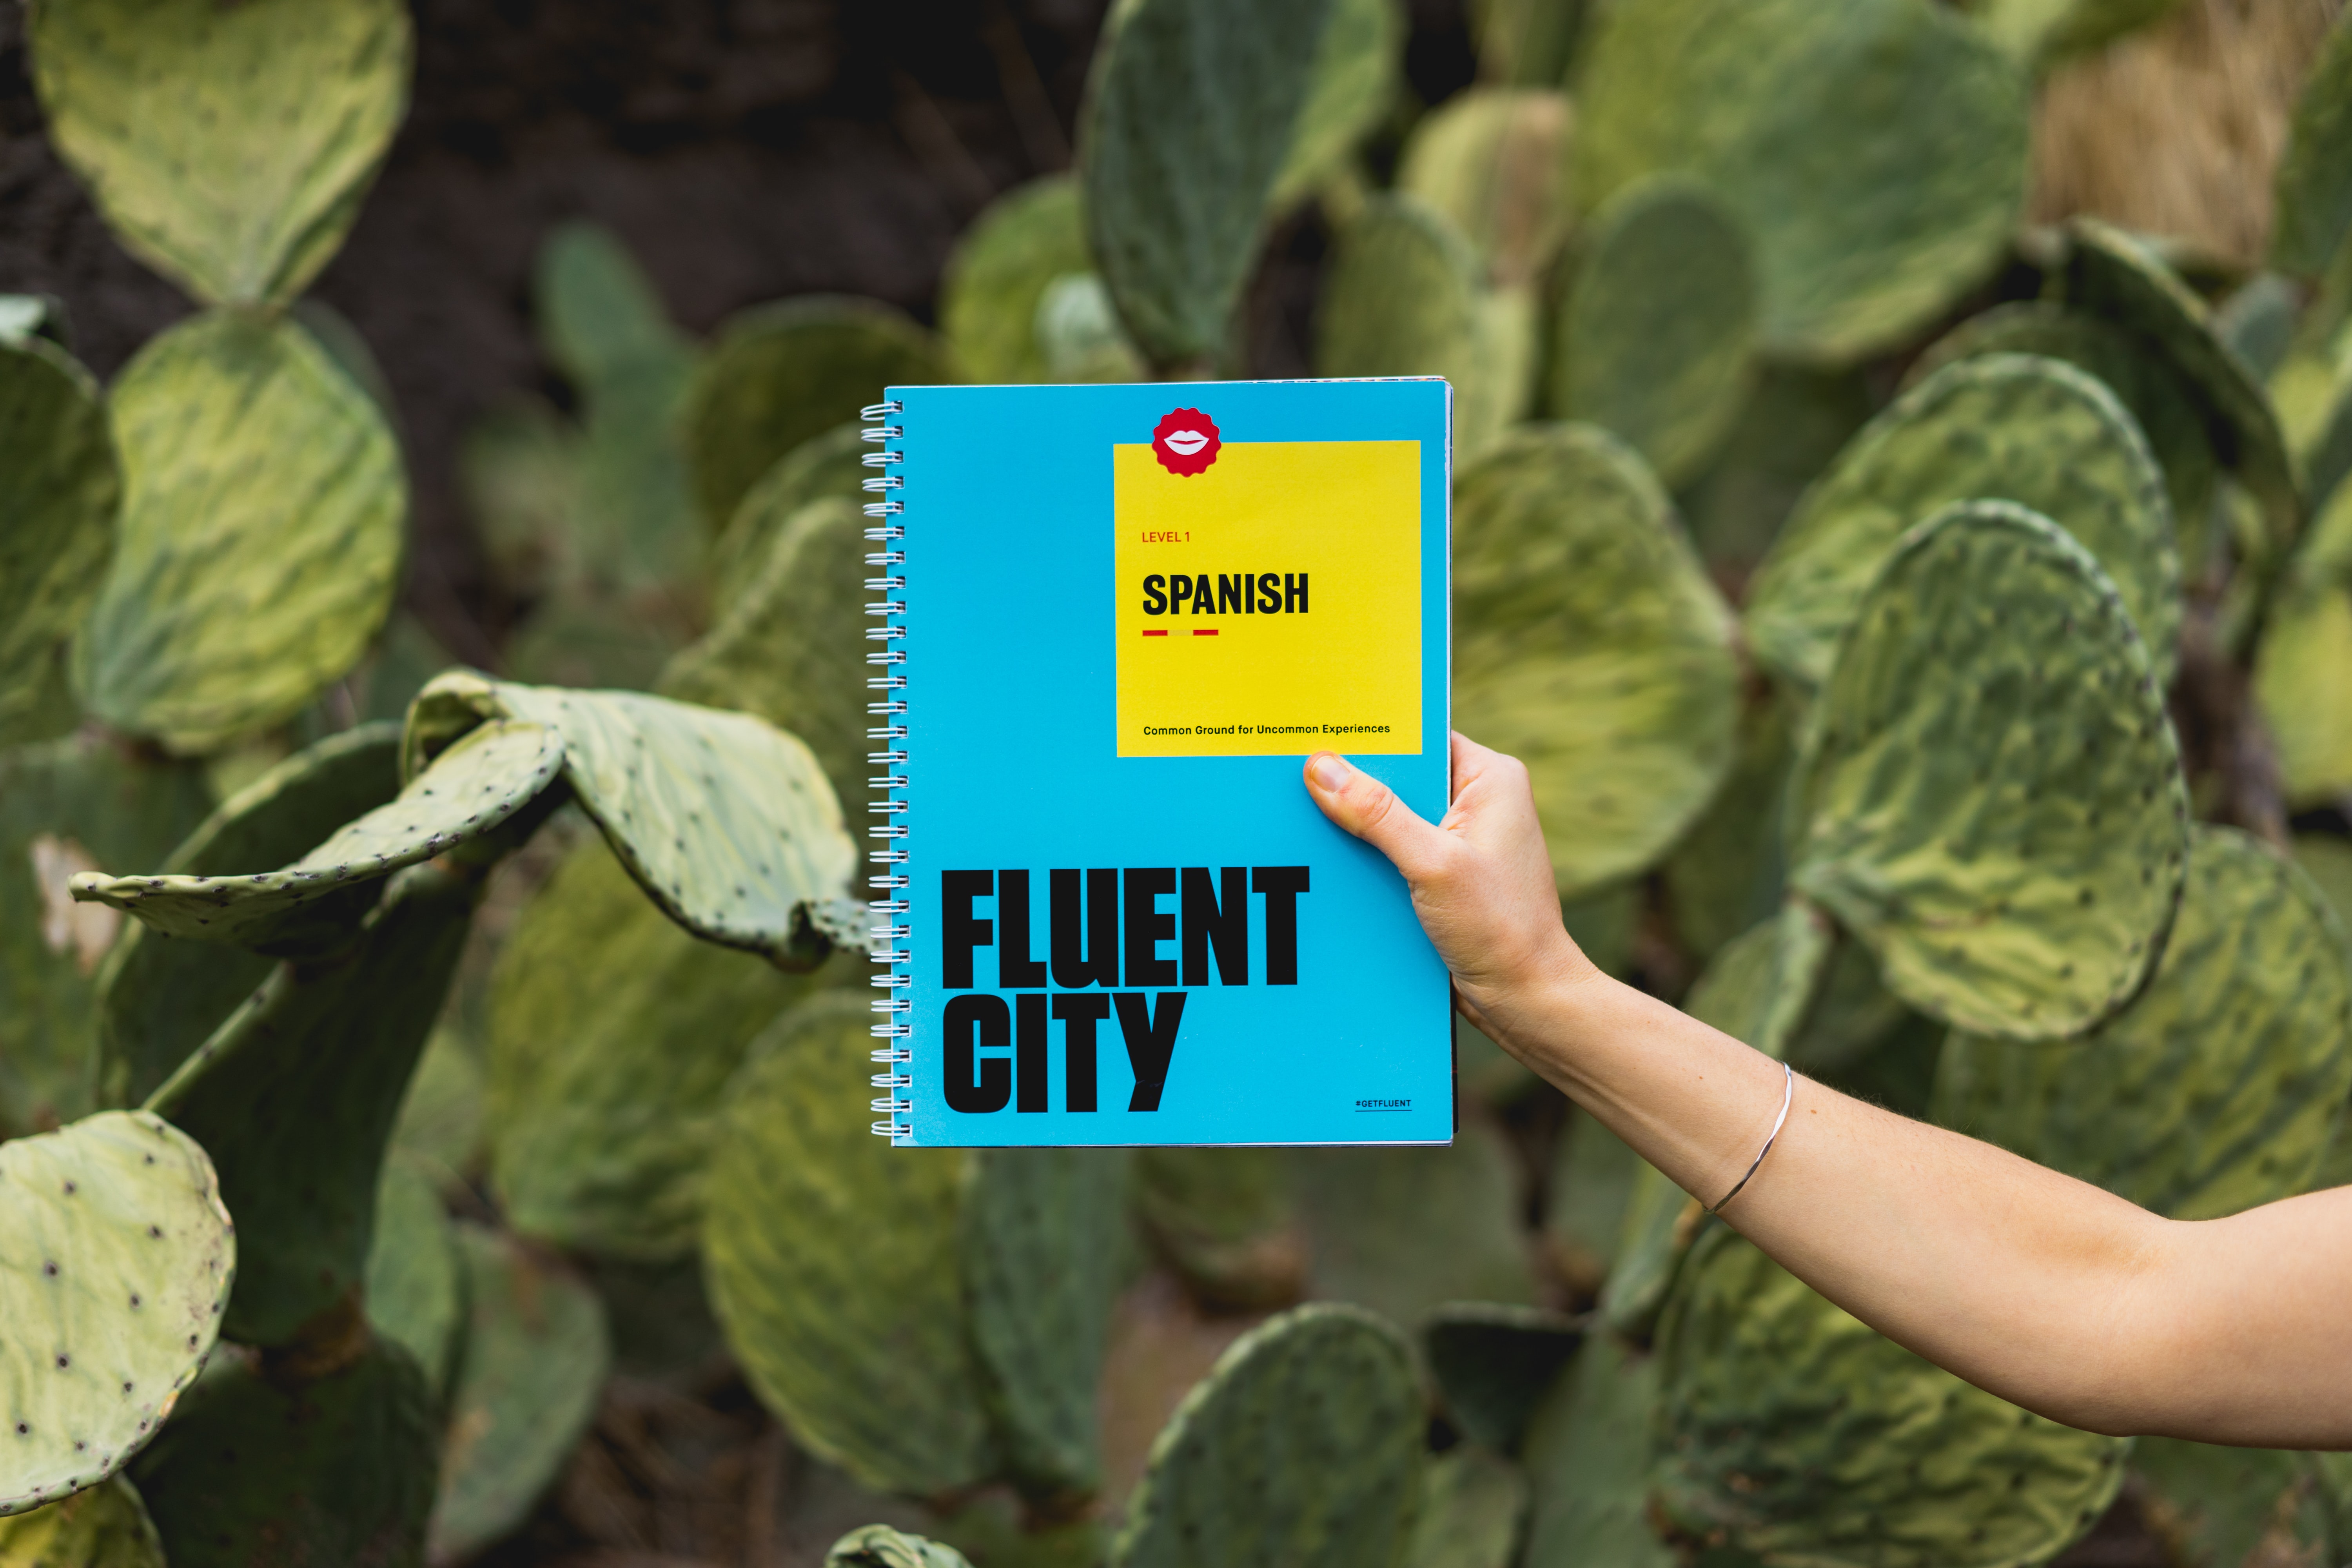 Hand holding notebook reading "Fluent City: Spanish". Cactus background.